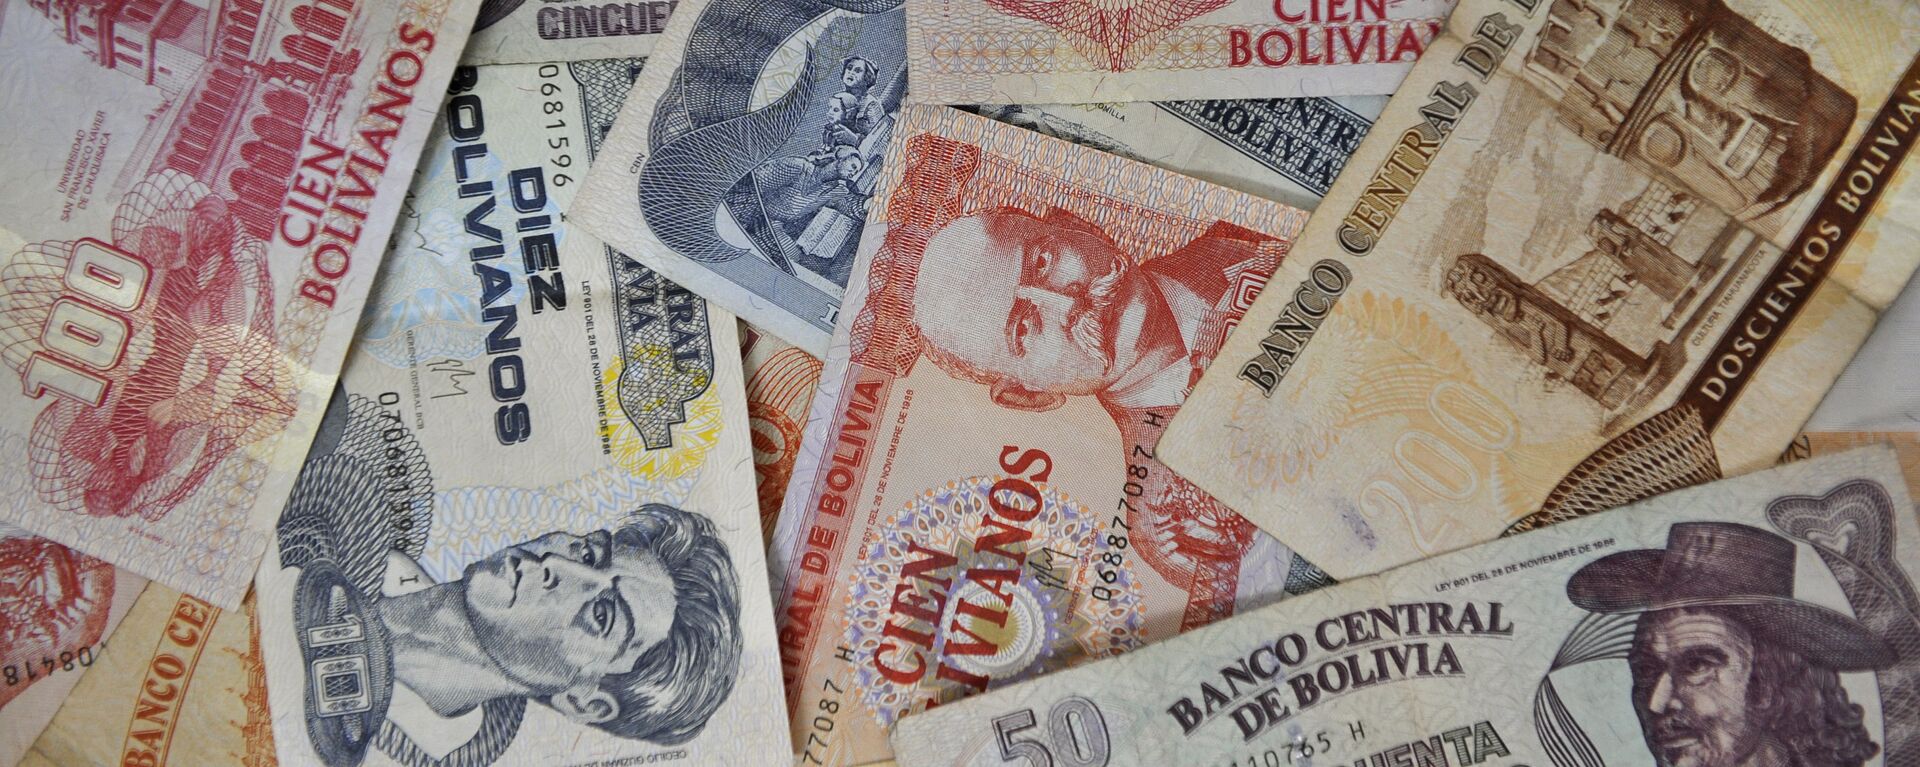 Bolivianos (billetes) - Sputnik Mundo, 1920, 30.04.2021